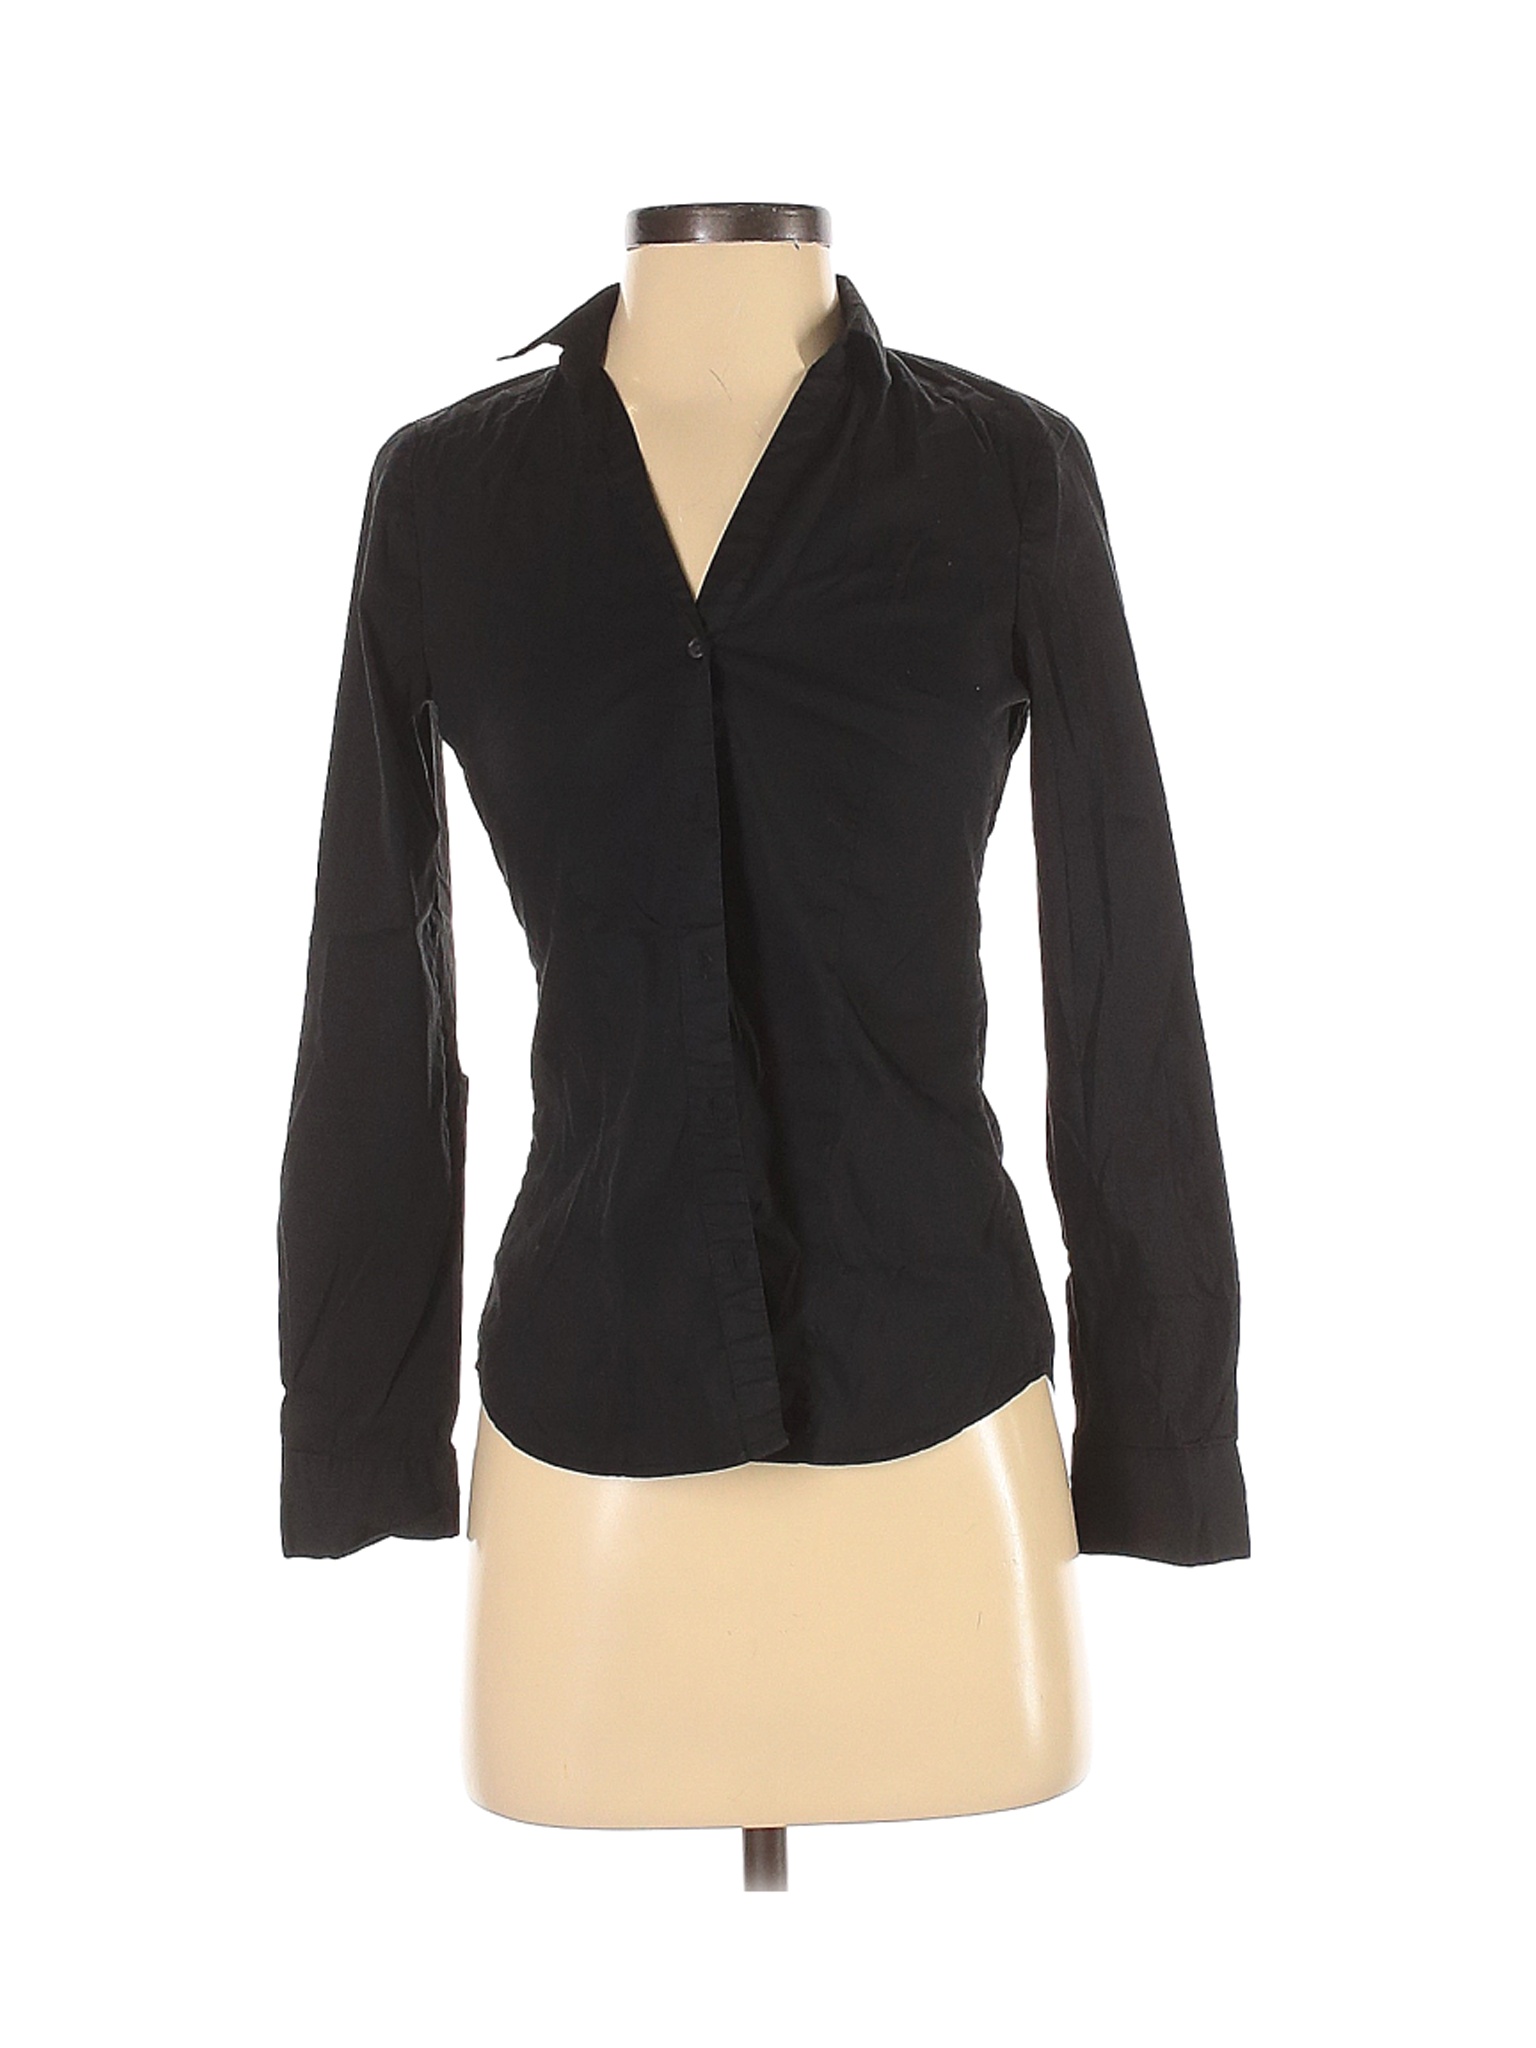 H&M Women Black Long Sleeve Button-Down Shirt 2 | eBay